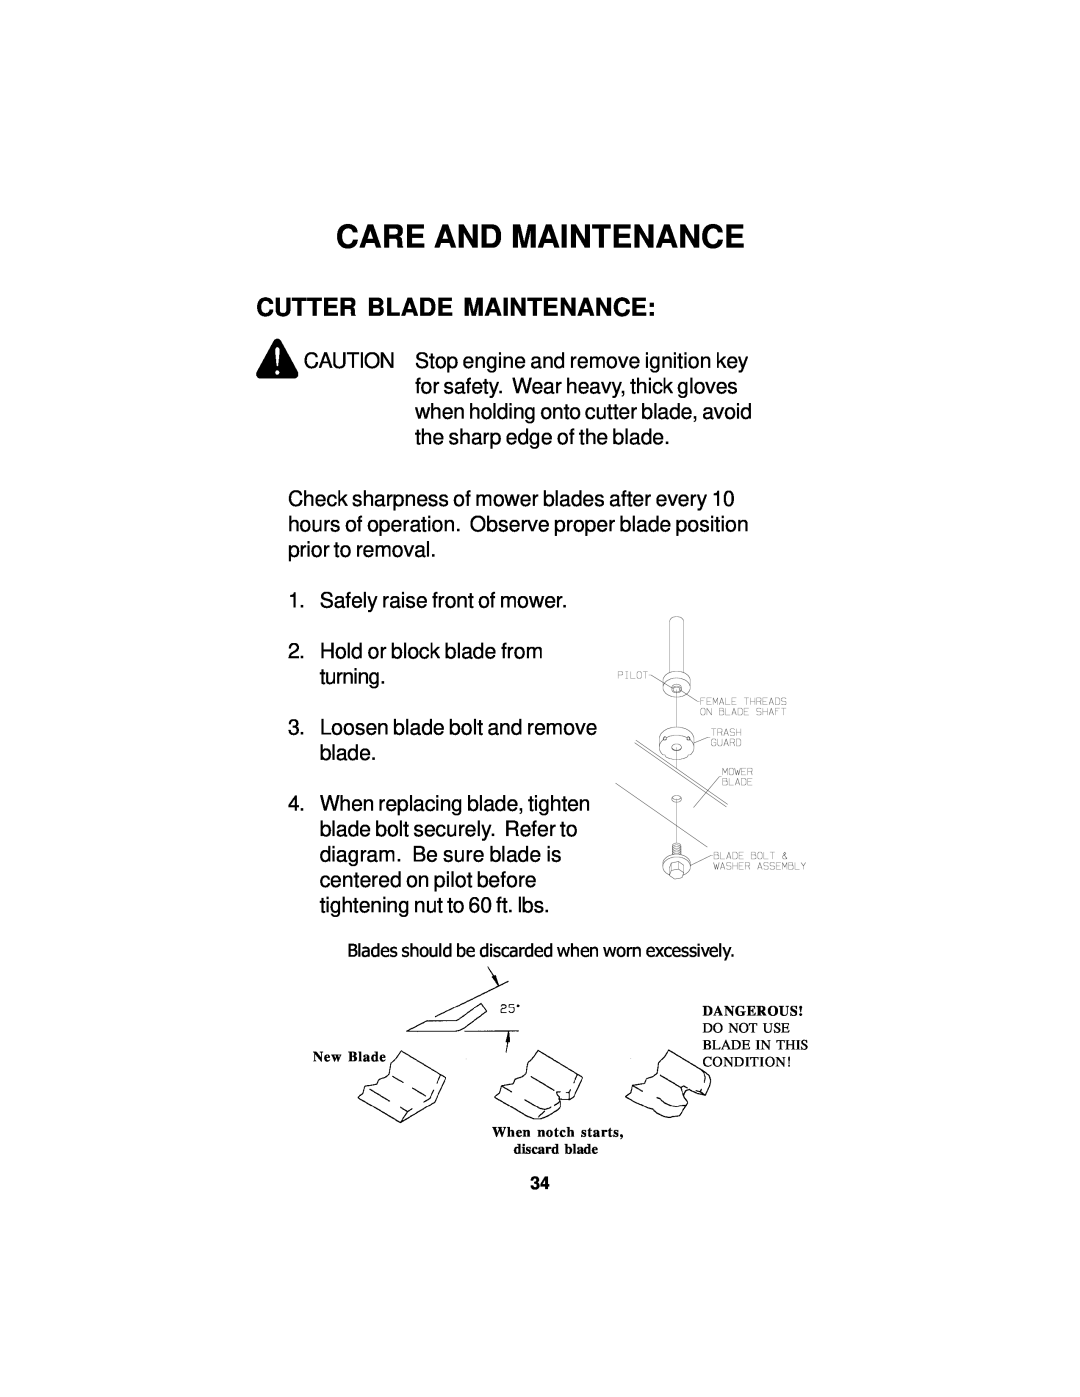 Dixon 18124-0804 manual Cutter Blade Maintenance, Care And Maintenance 